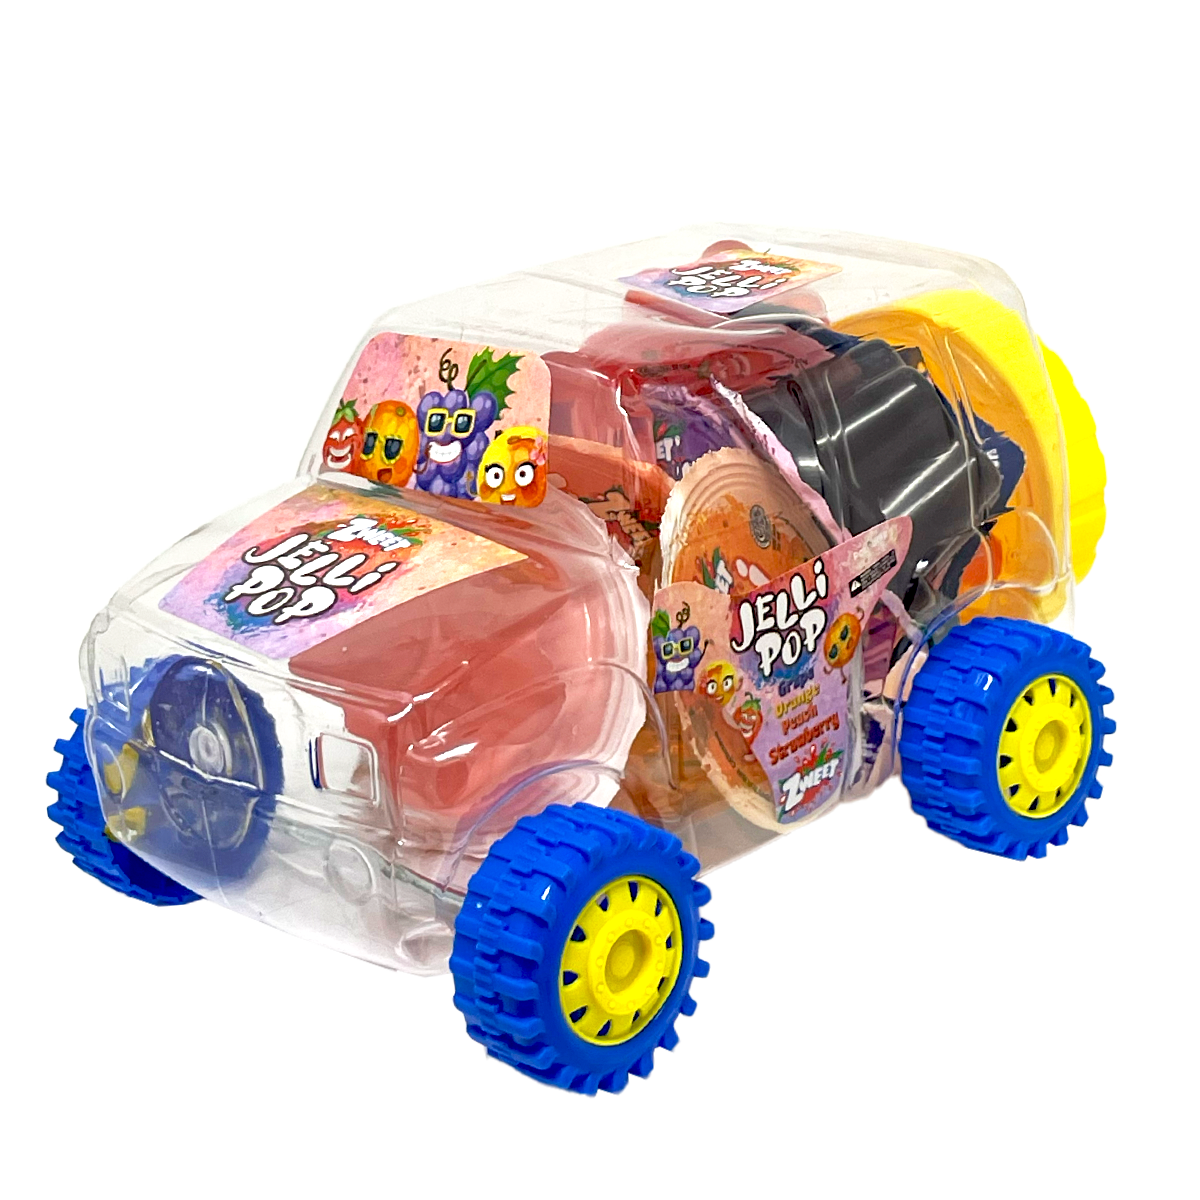 Jelli Pop Car | 8PCS